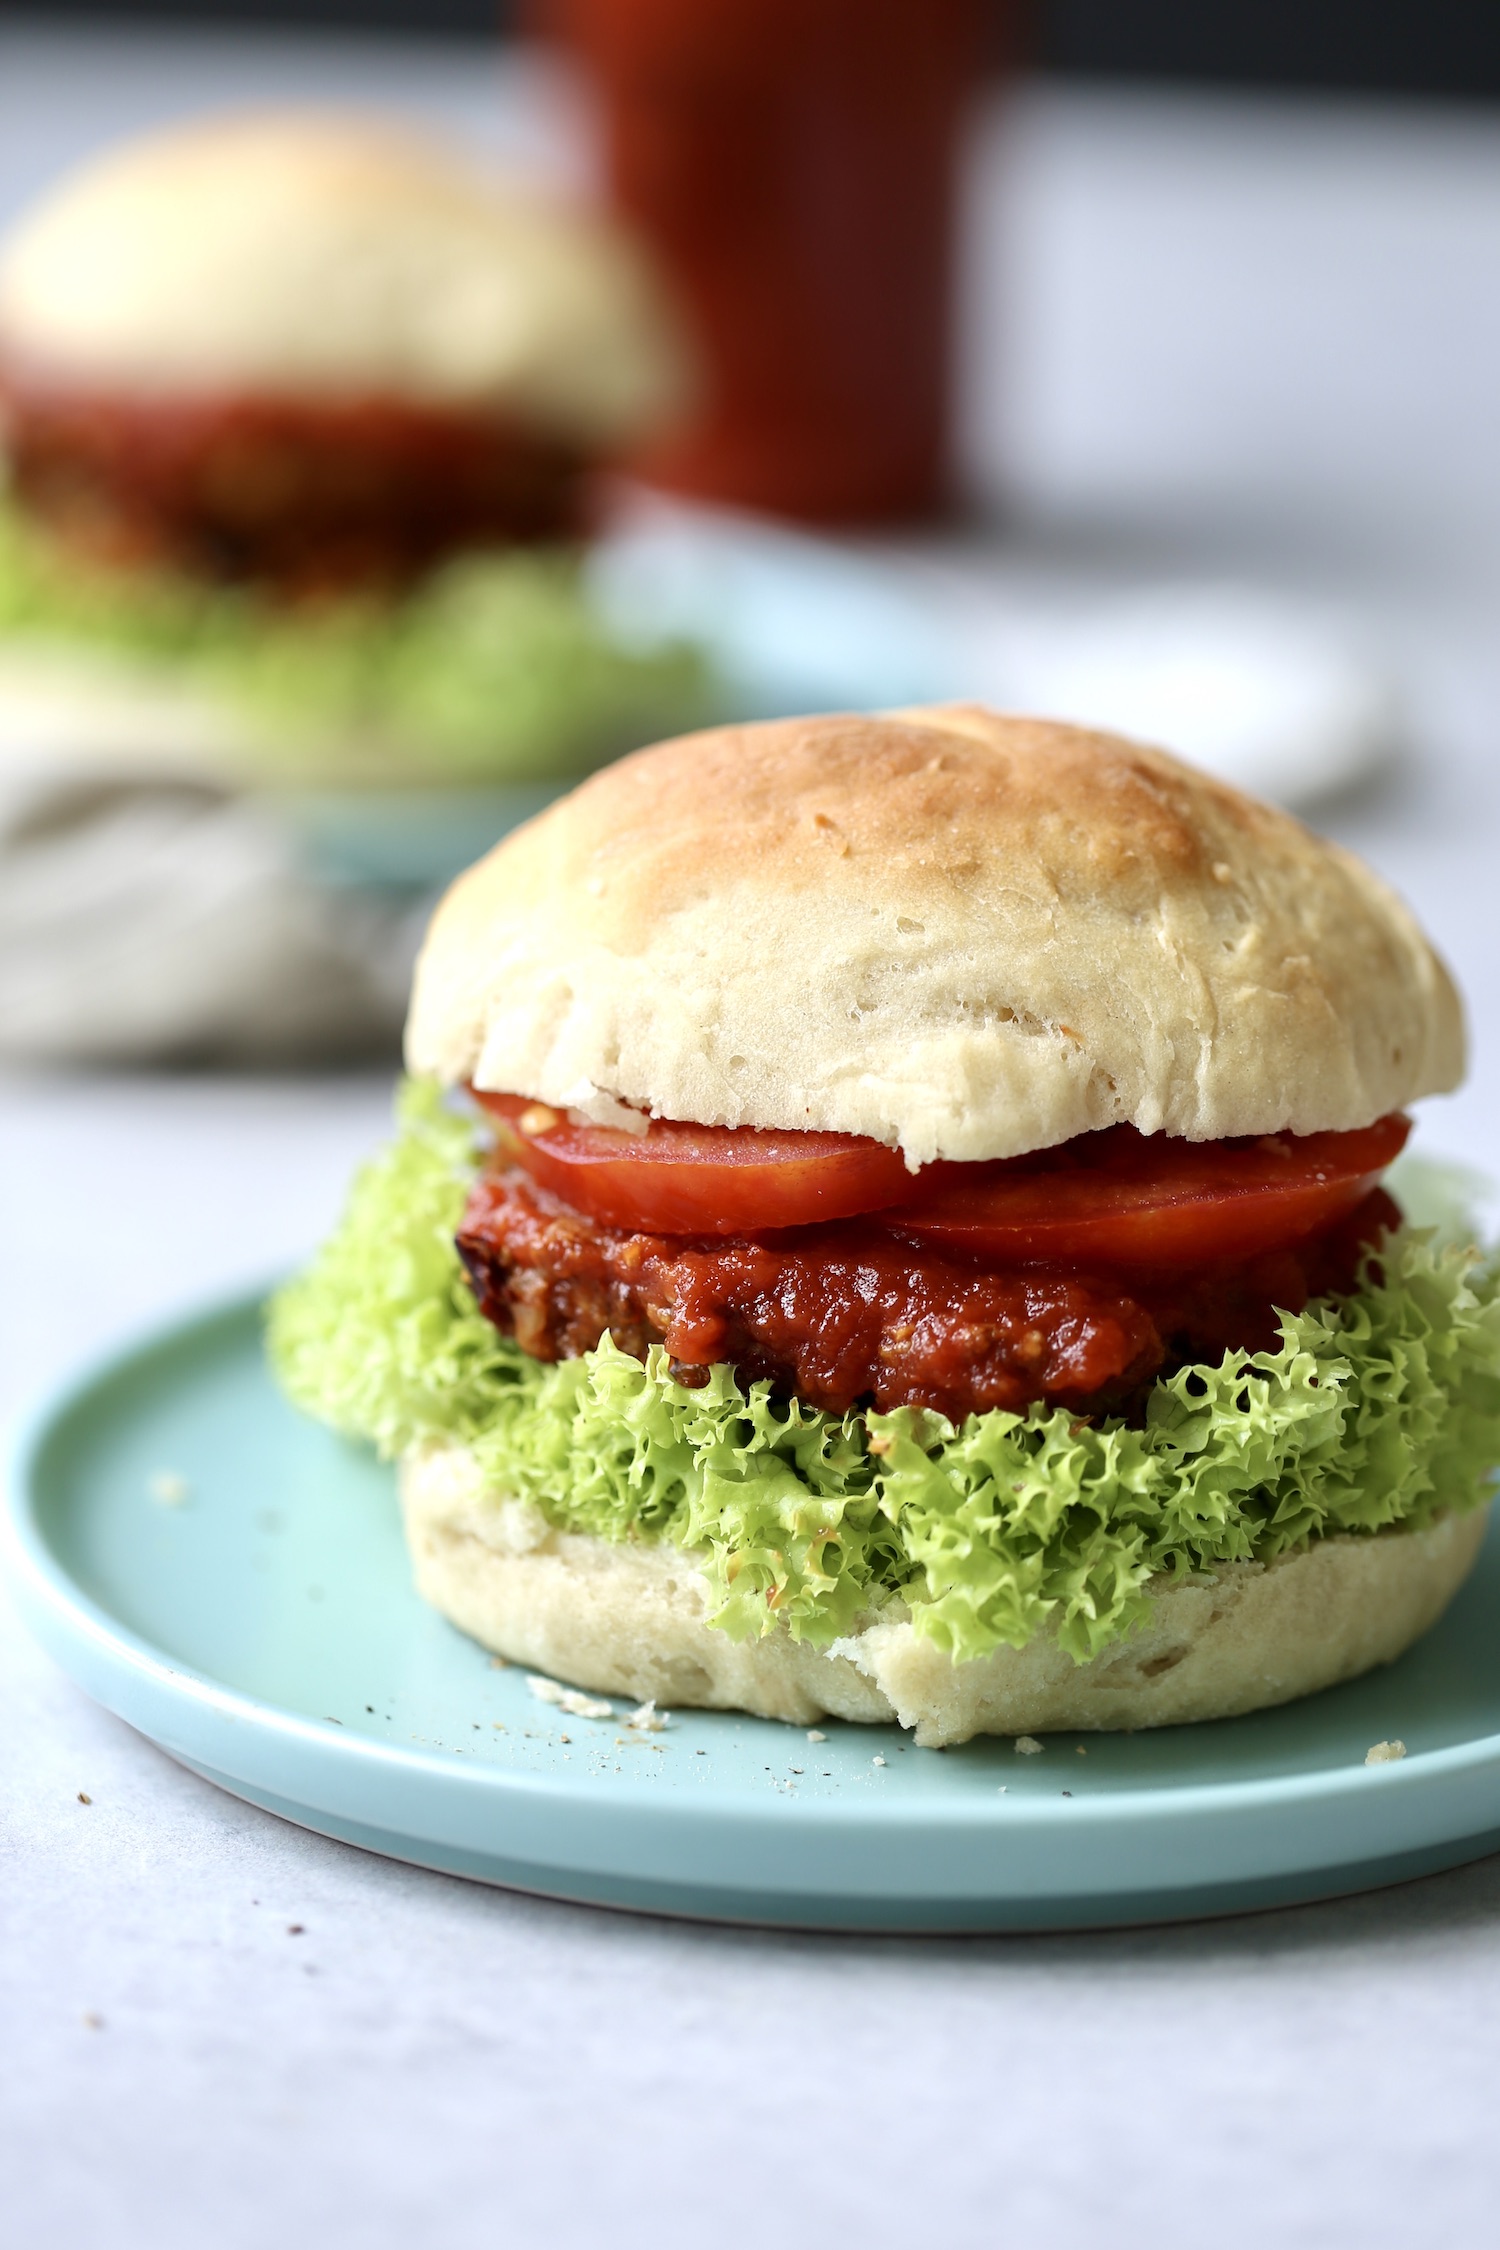 a homemade vegan burger bun filled with a veggie burger, lettuce, tomato and BBQ sauce